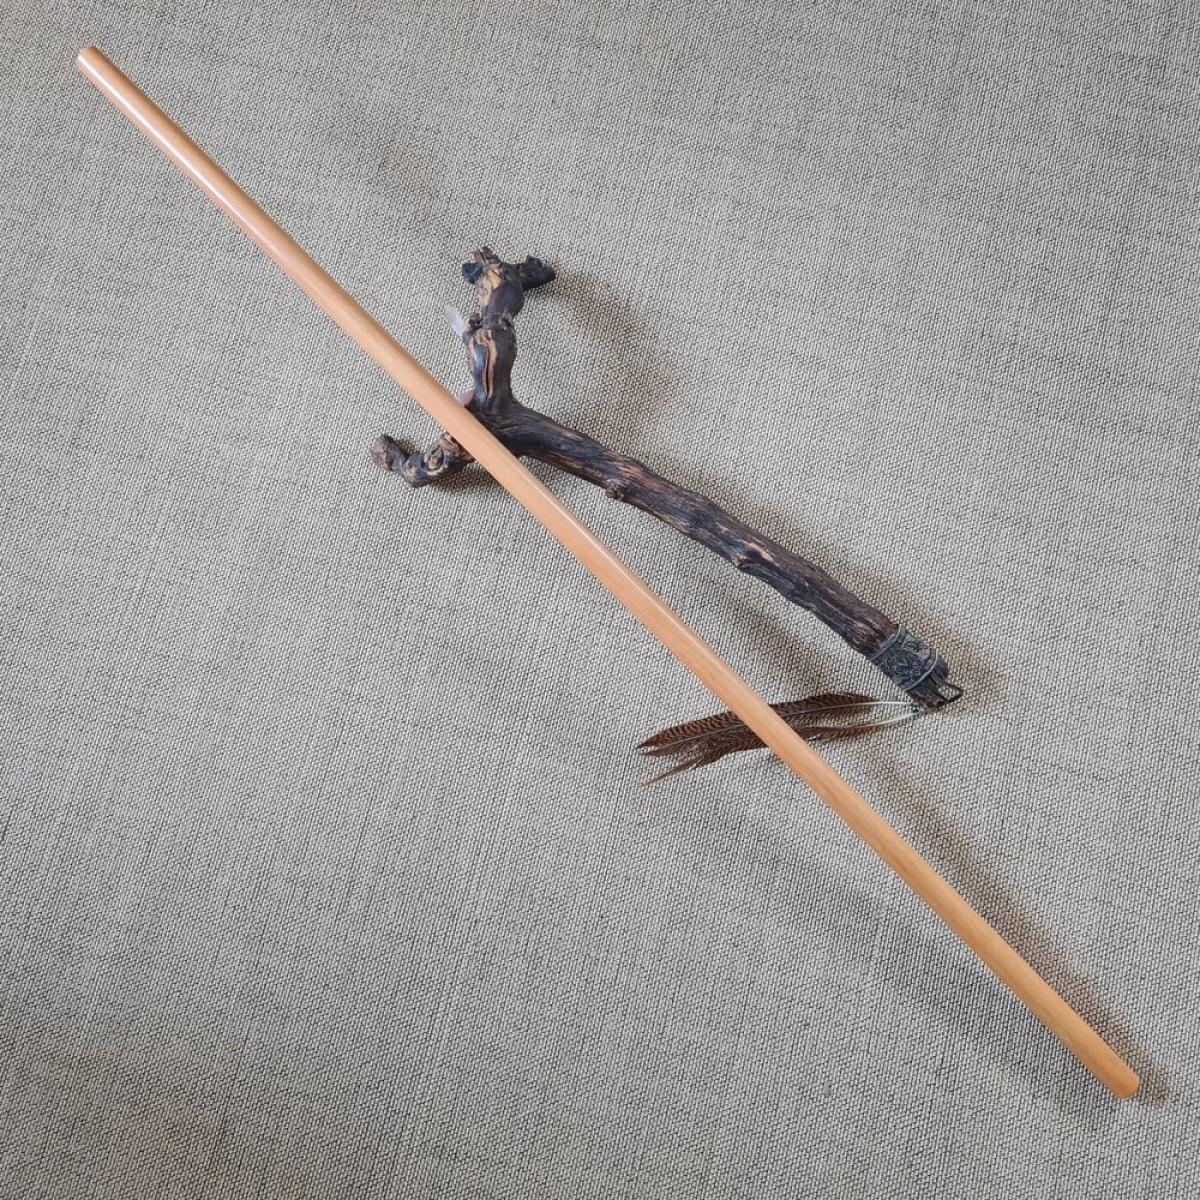 Jo-Stab aus Betis-Holz - Länge 135 cm ➤ www.bokken-shop.de. Passend für Aikido, Iaido, Jo-Jutsu, Jodo, Bujinkan. Dein Budo-Fachhändler!